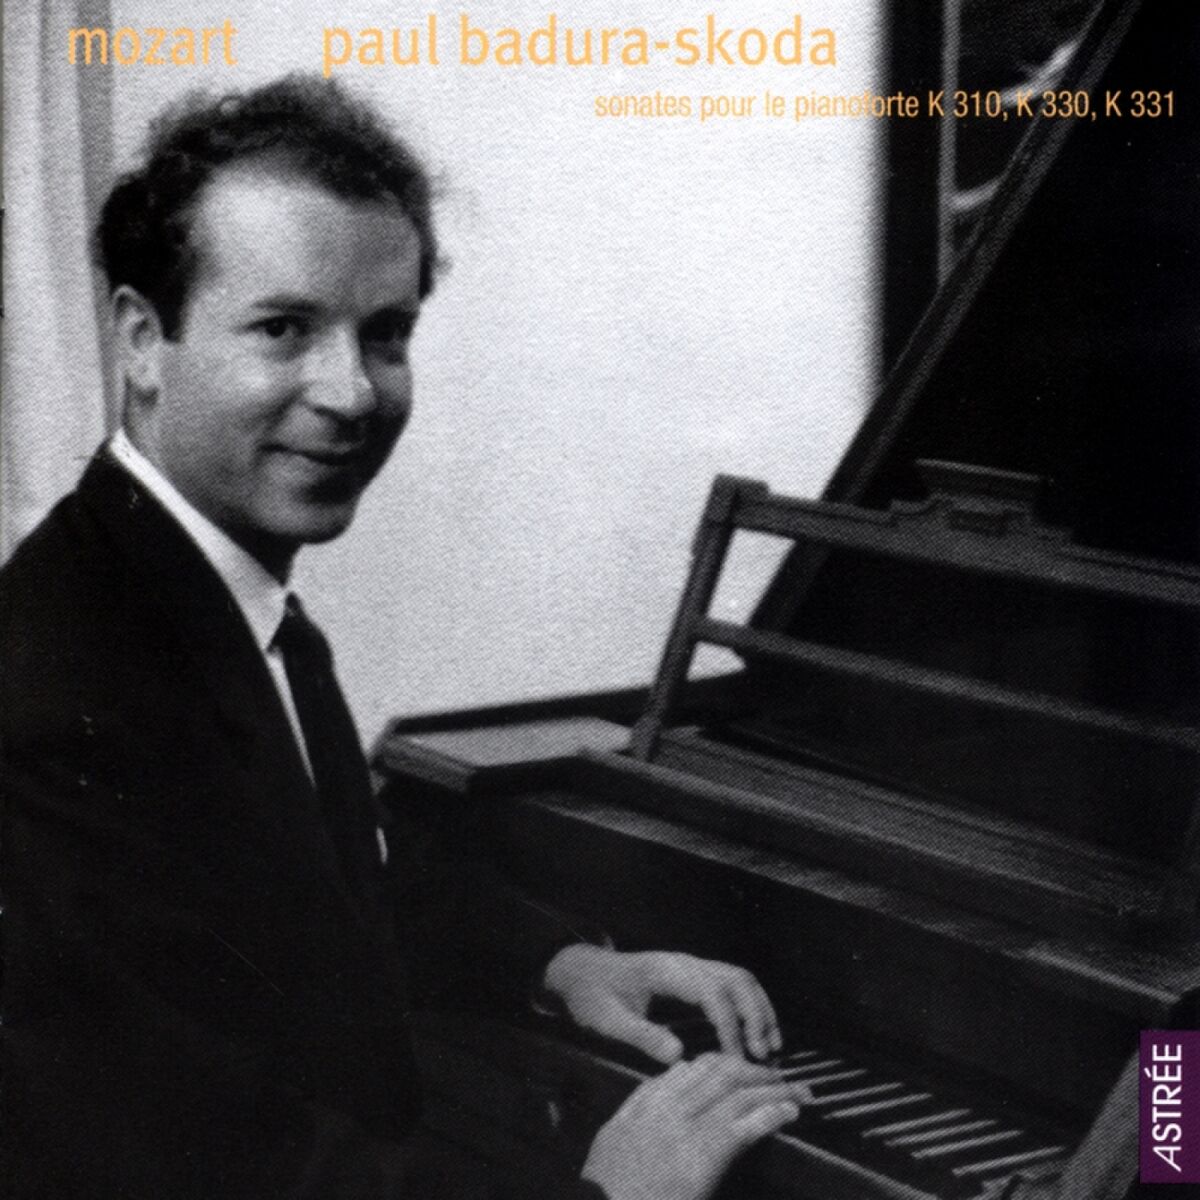 Paul Badura-Skoda: albums